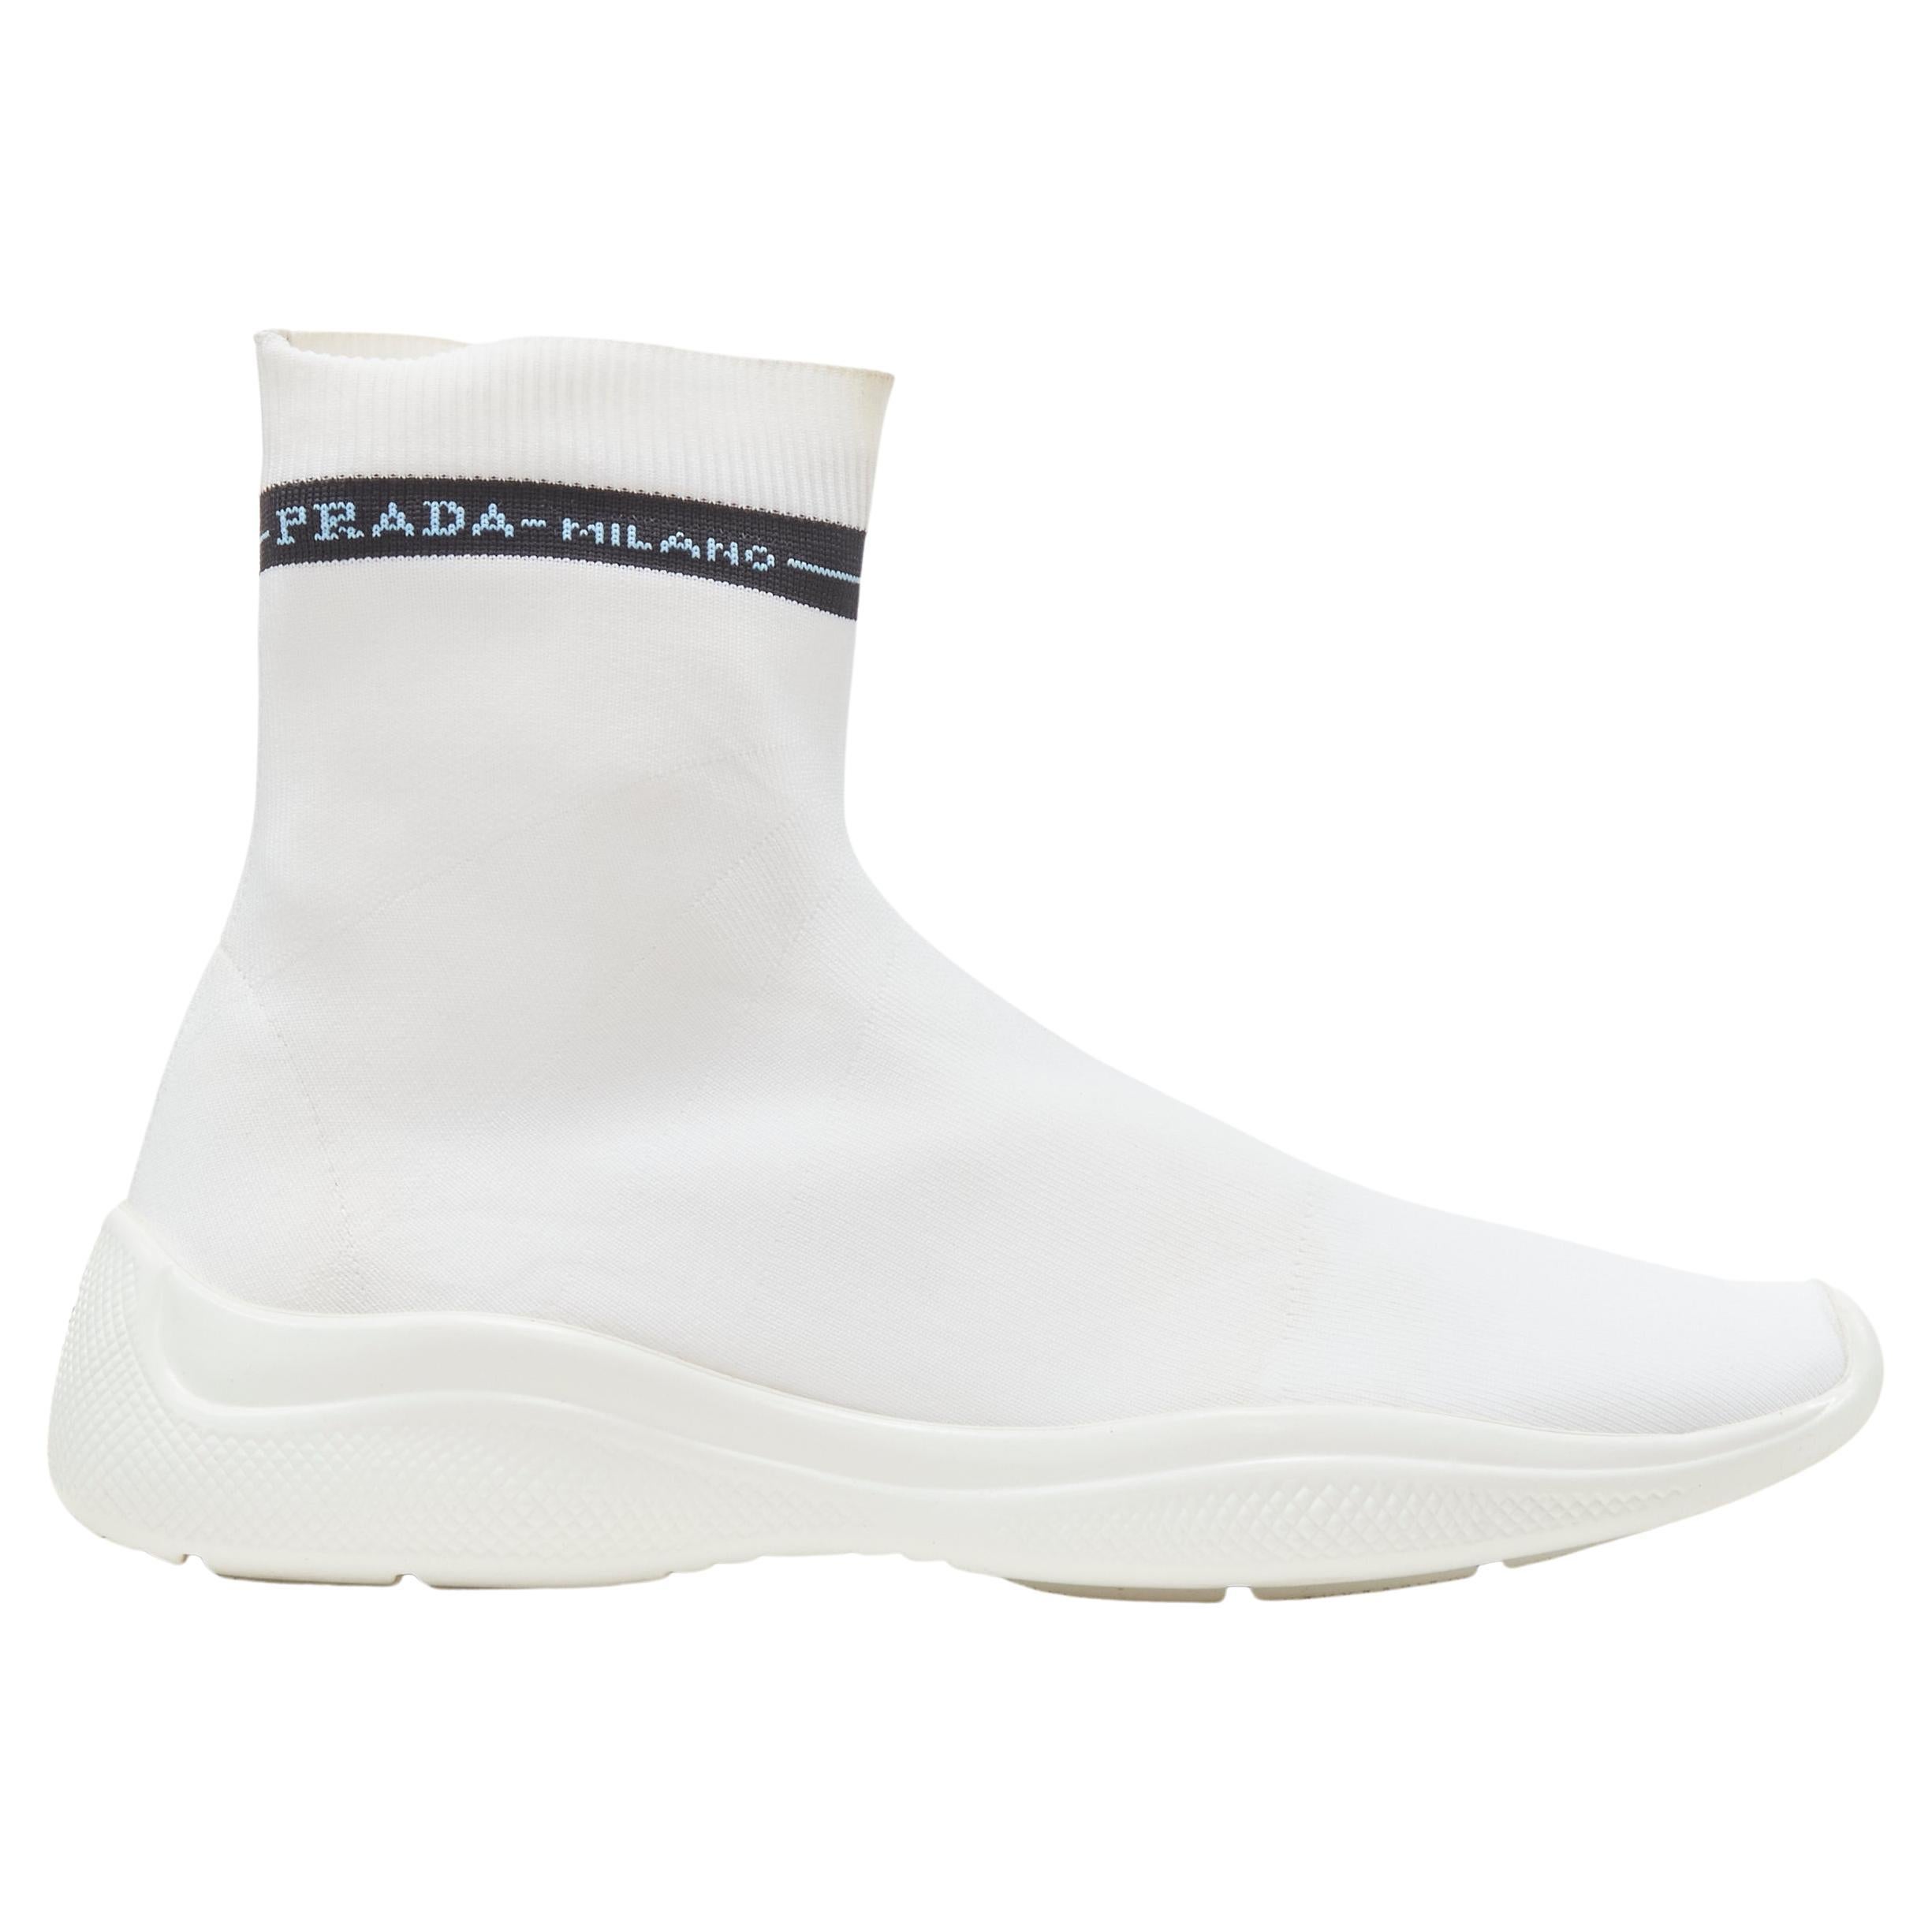 PRADA Milano black logo band white sock knit high top sneaker EU35.5 For Sale